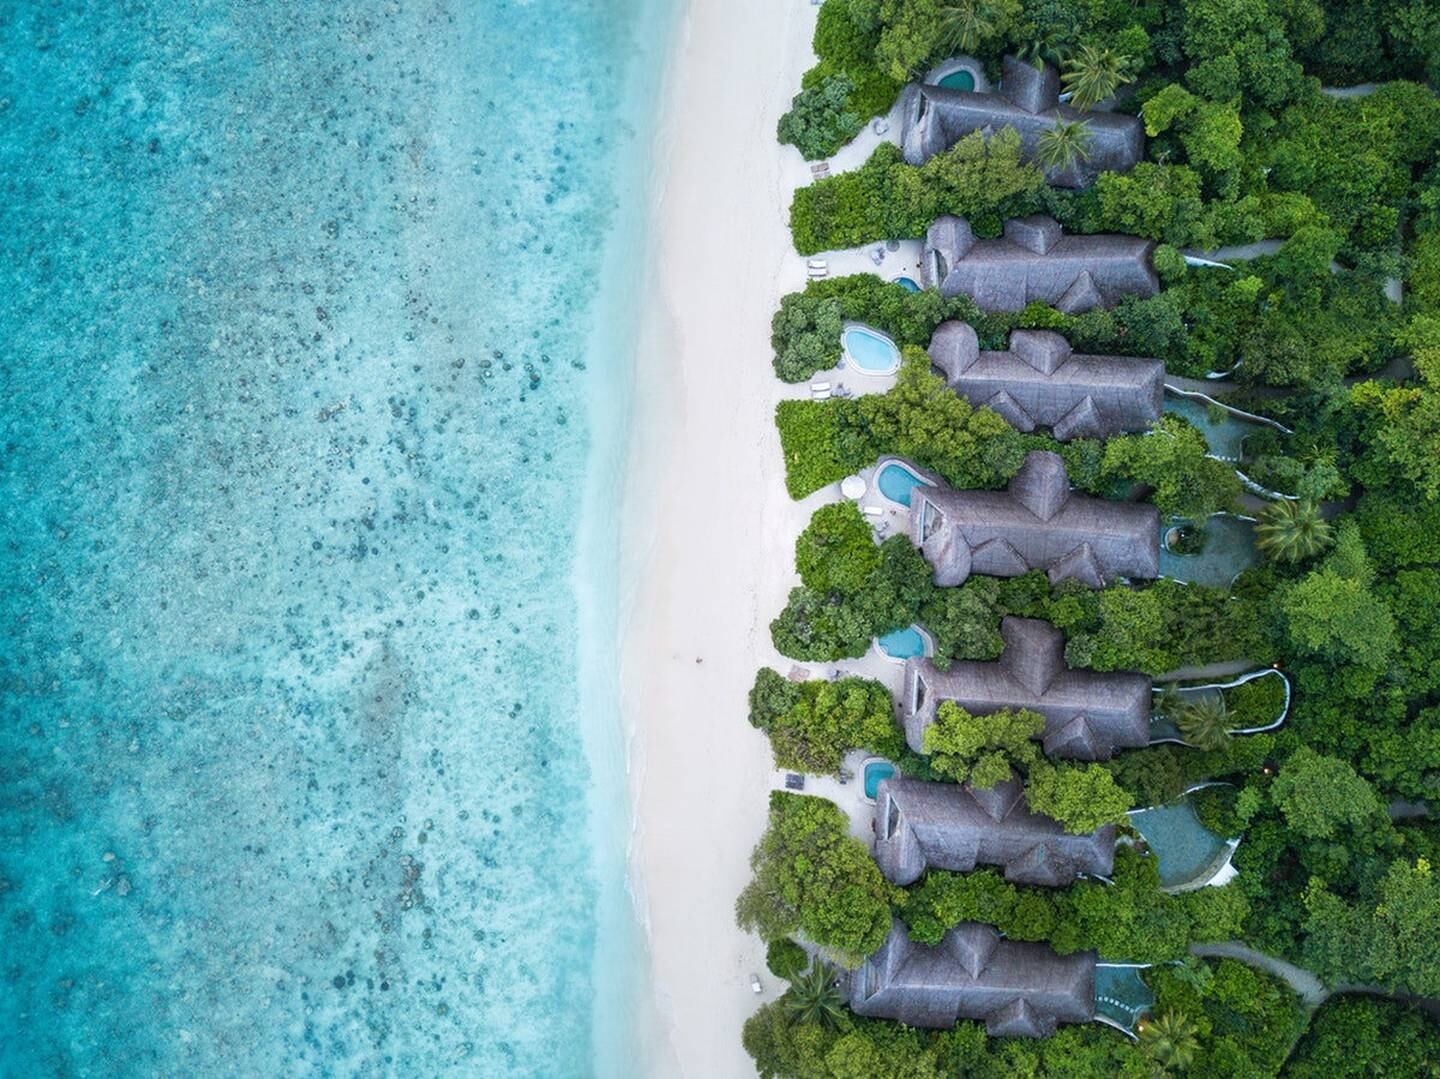 British hotelier Sonu Shivdasani, owner of the Soneva Fushi resort in the Maldives, says his secret to productivity is to fully disconnect from everything. Photo: Soneva Fushi